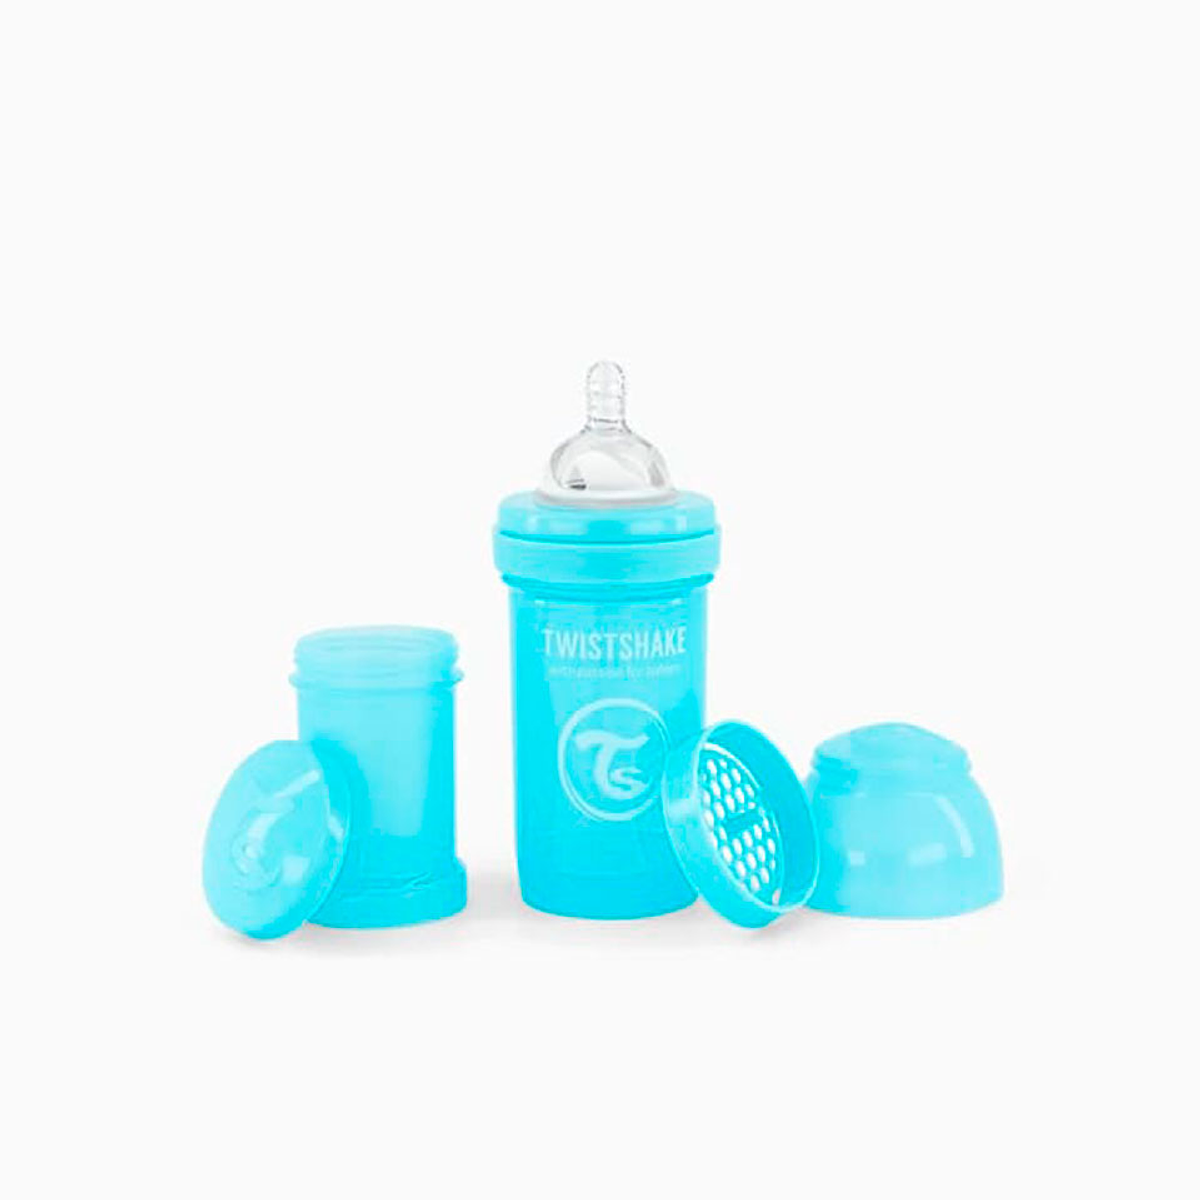 Twistshake Anti-Colic Baby Bottle | Online Store | Criandos.